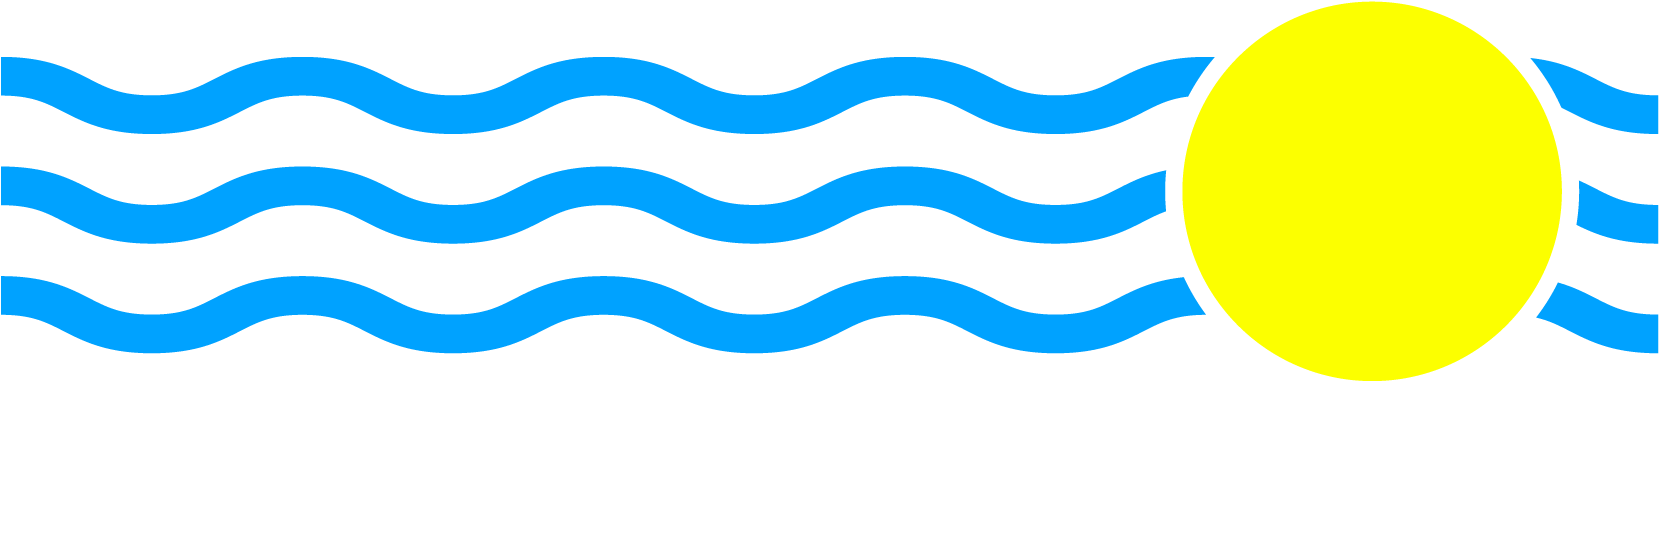 About Us - Key Biscayne Tennis Association (1692x600)